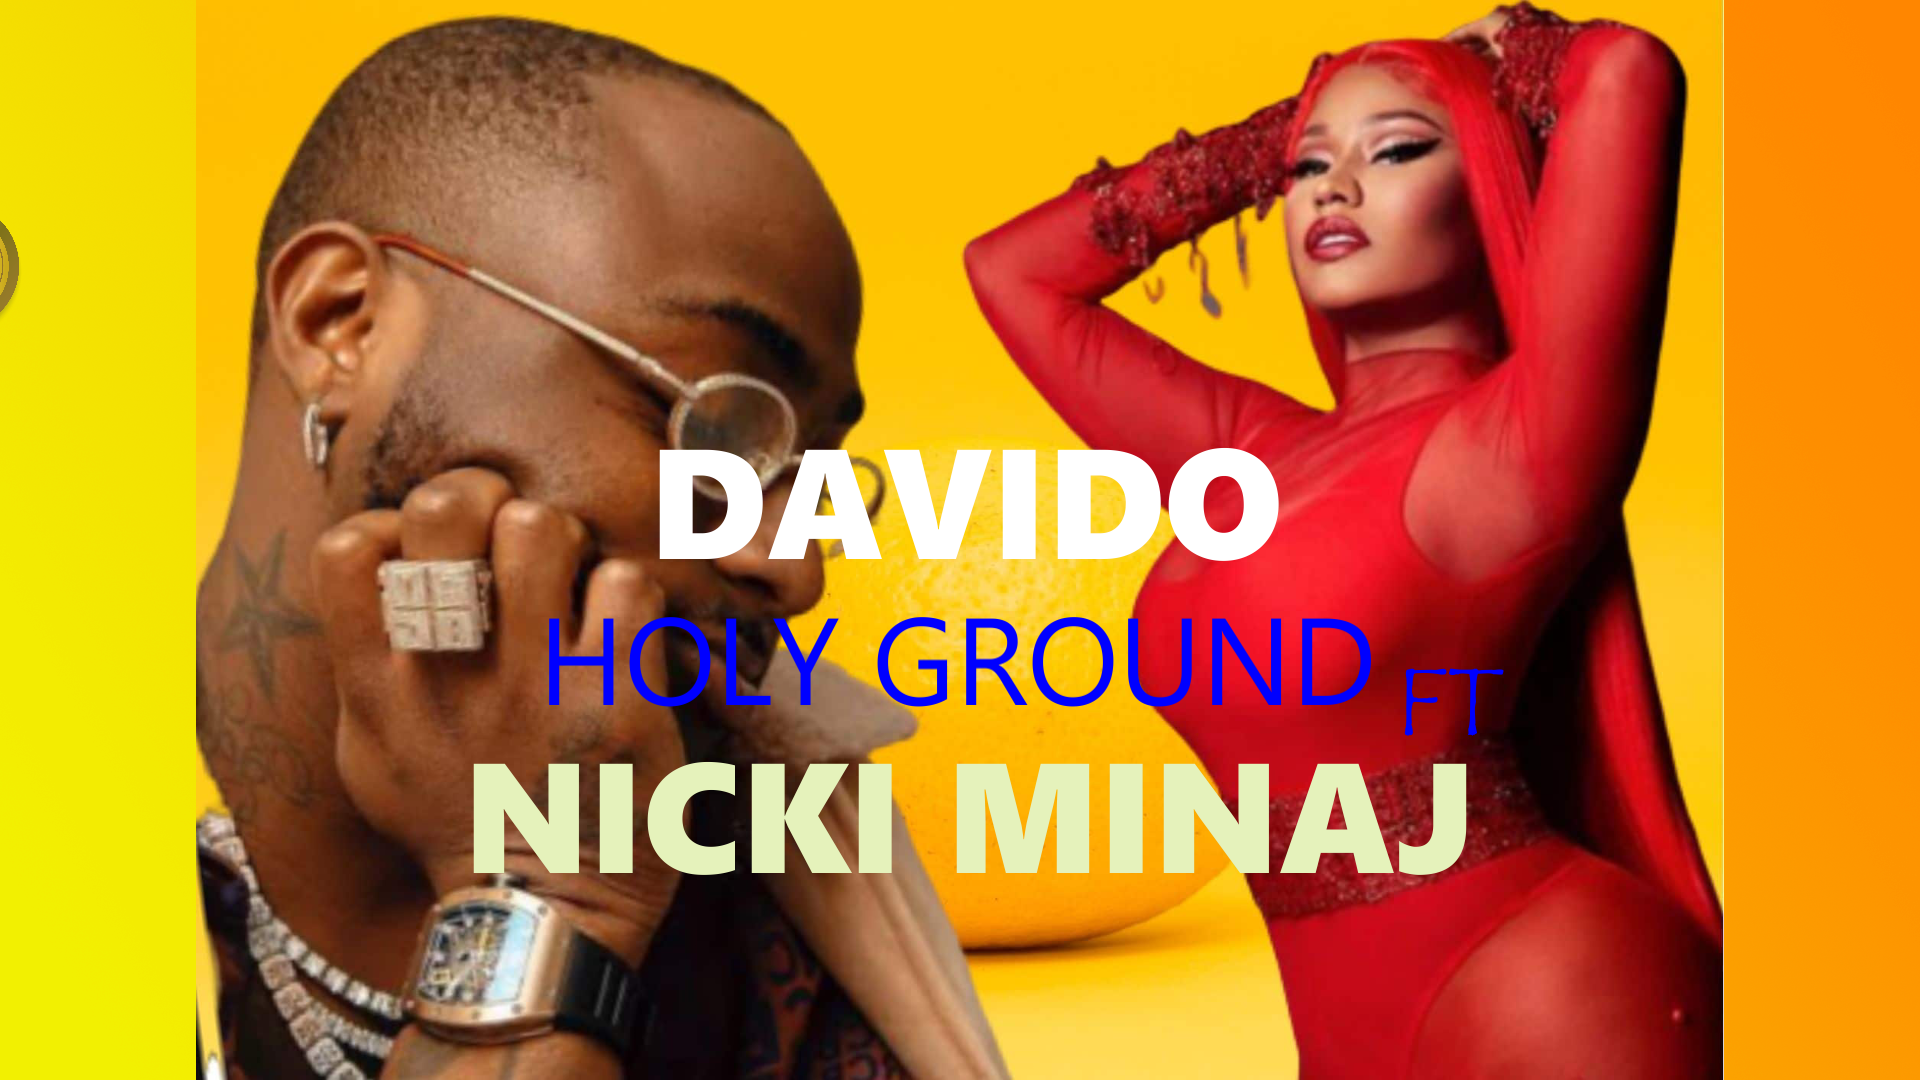 You are currently viewing Davido – Holy Ground ft Nicki minaj (Official Lyrics Video)